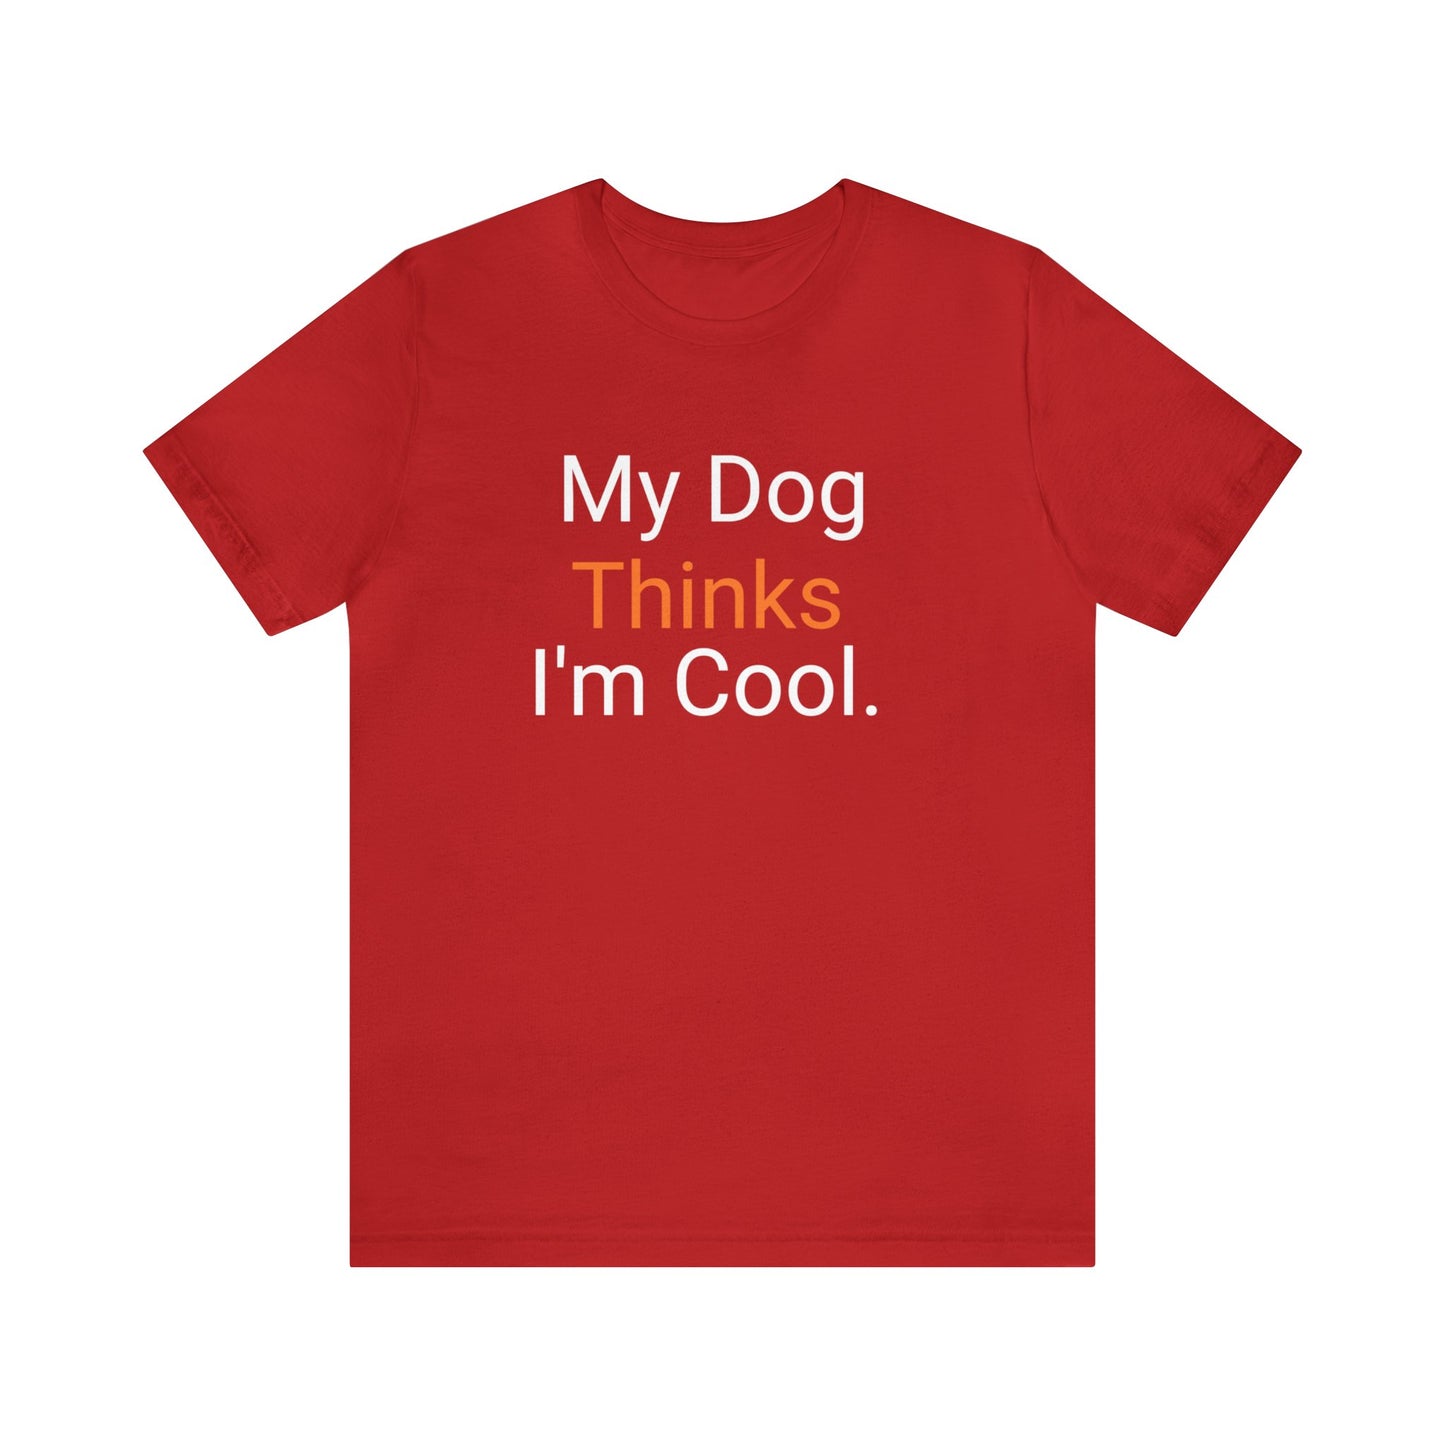 My dog Thinks I'm Cool - Funny Dog Shirts - Jersey Short Sleeve Tee